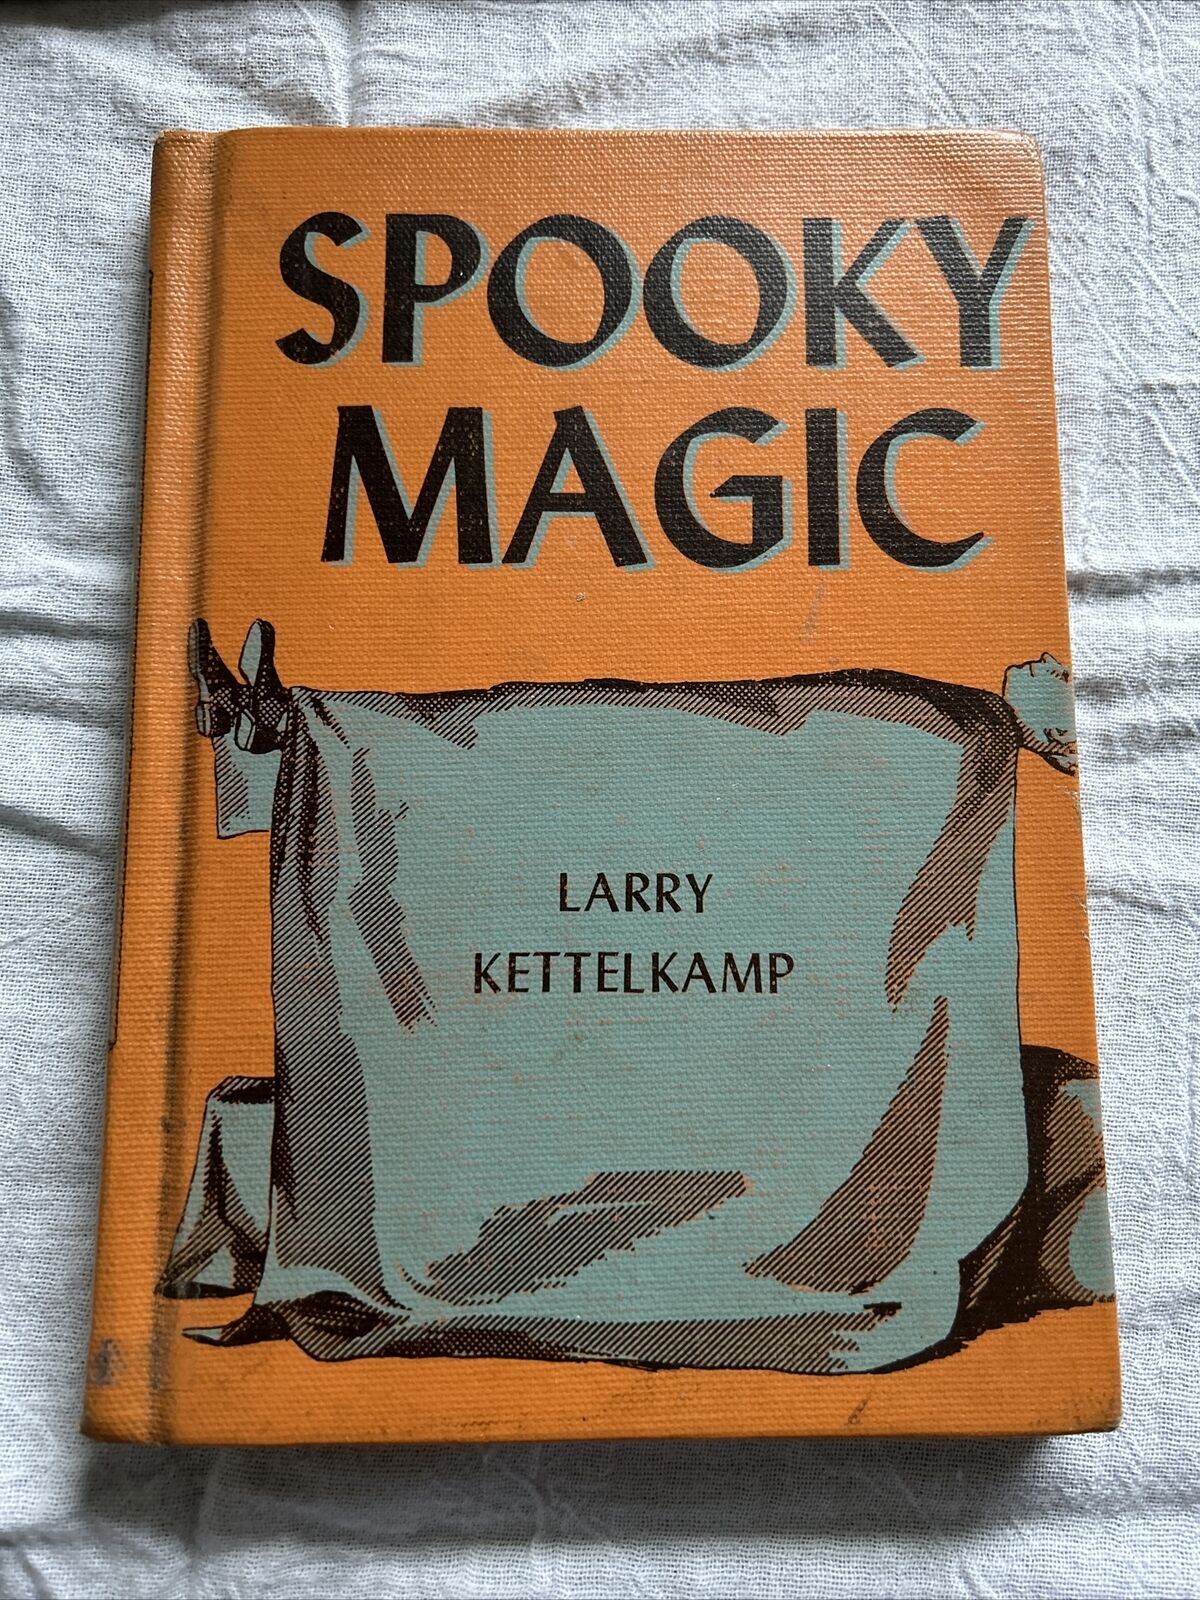 Vintage Spooky Magic Tricks Book 1955 Larry Kettelkamp